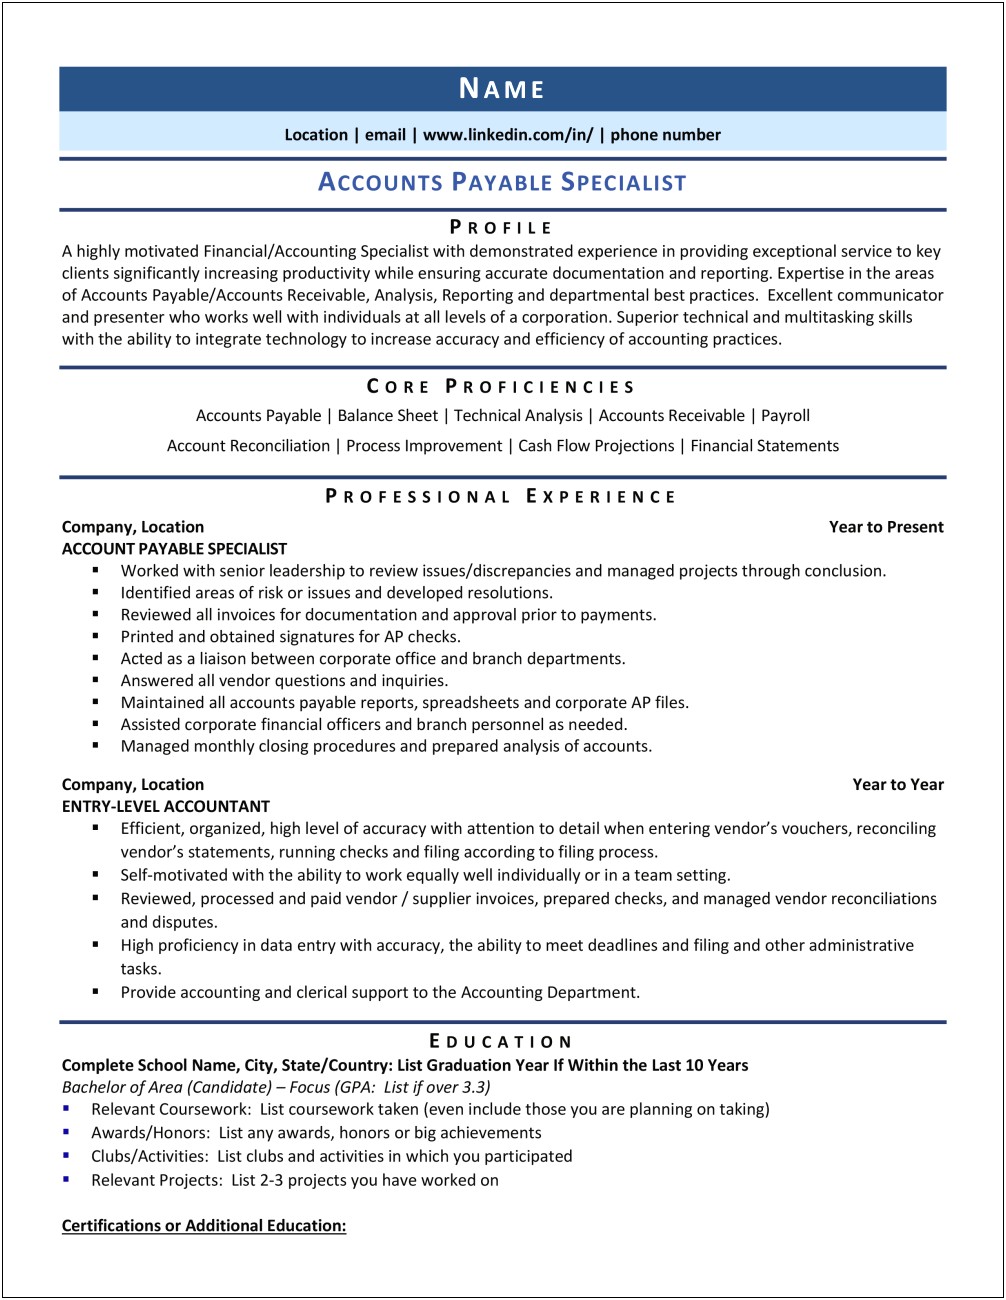 Sample Accounts Payable Specialist Resume